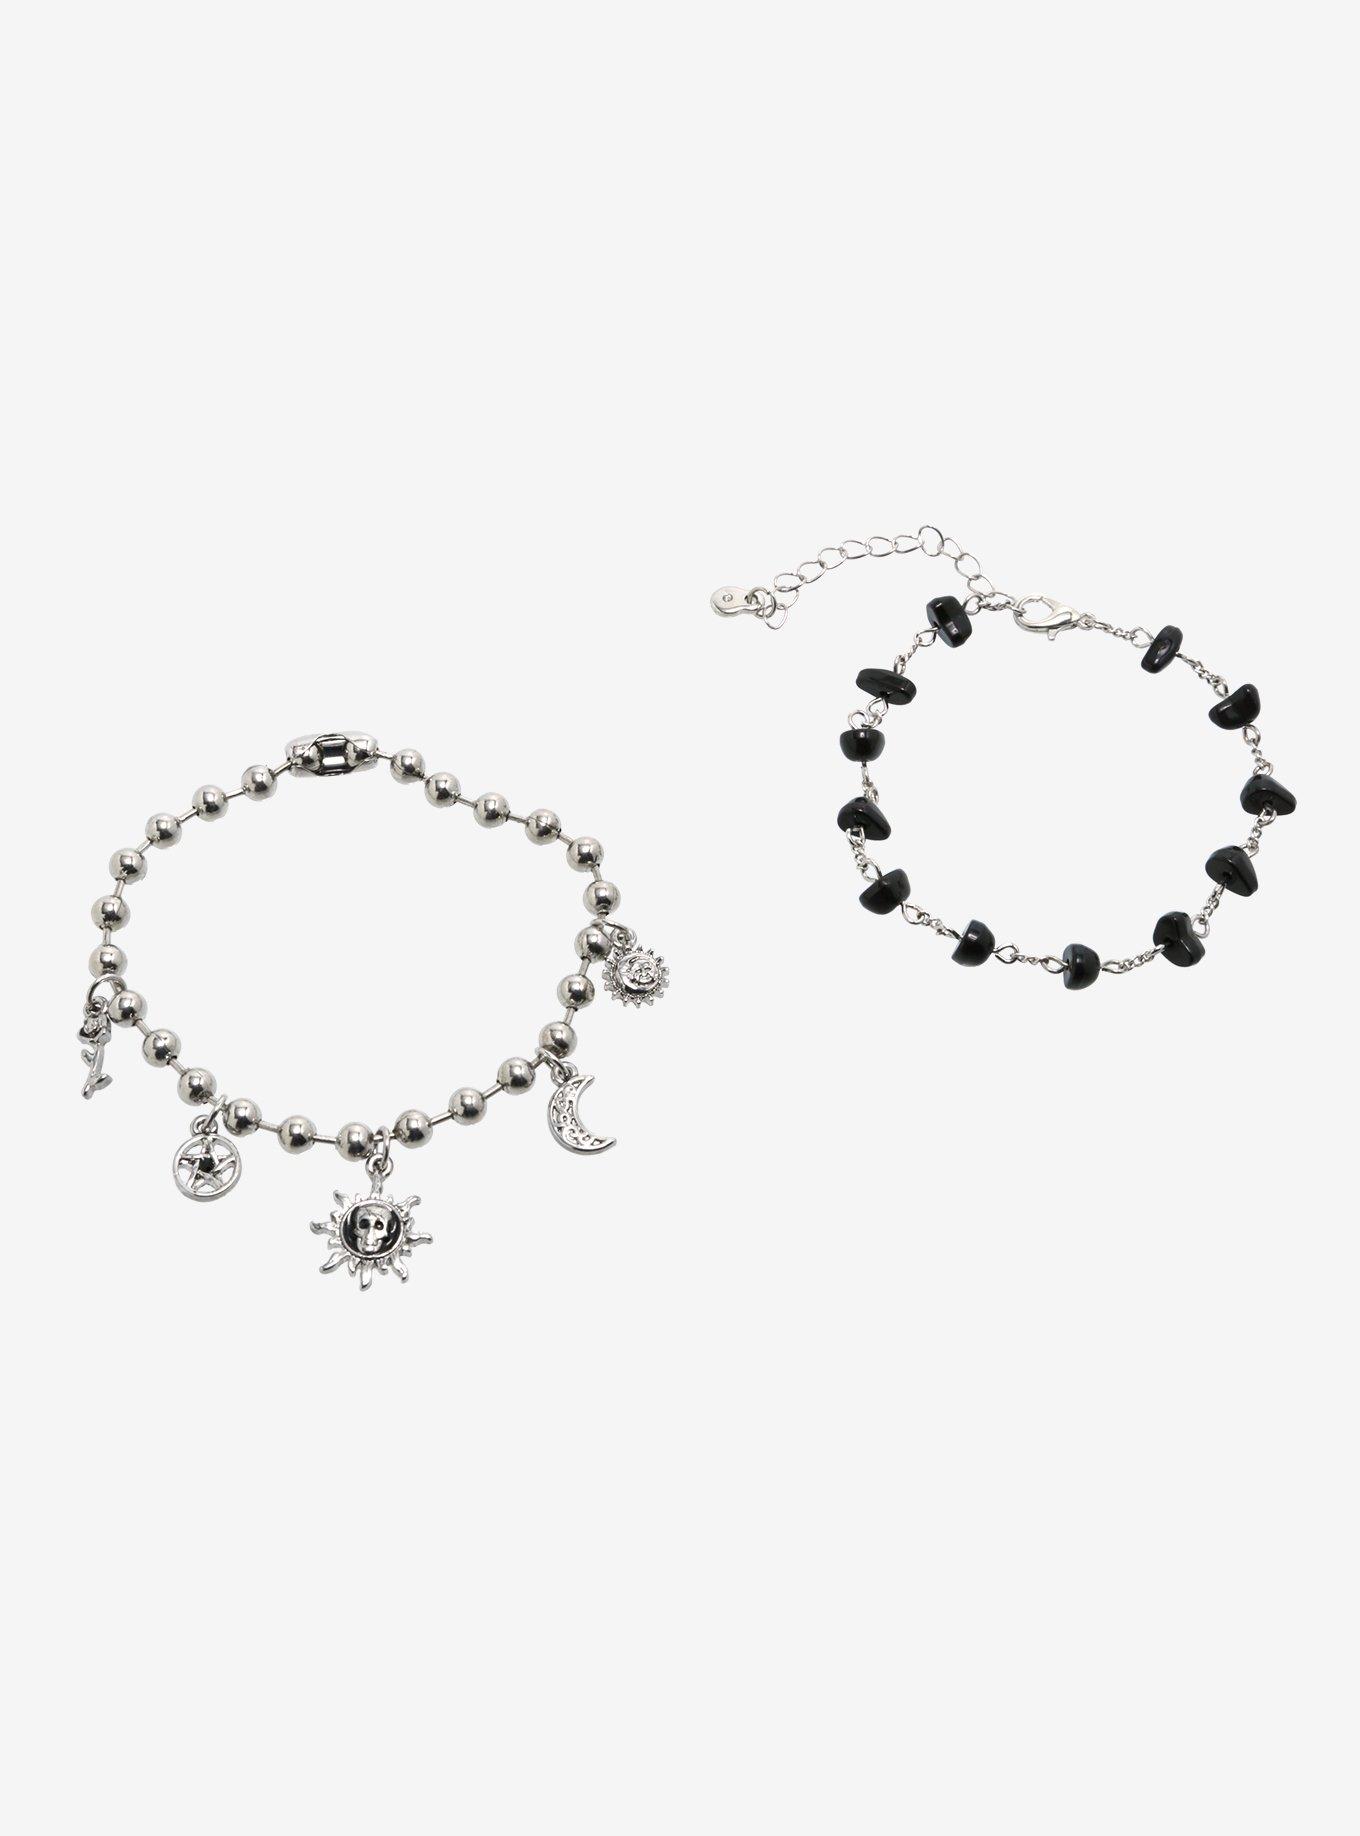 Cosmic Aura® Celestial Black Stone Bracelet Set